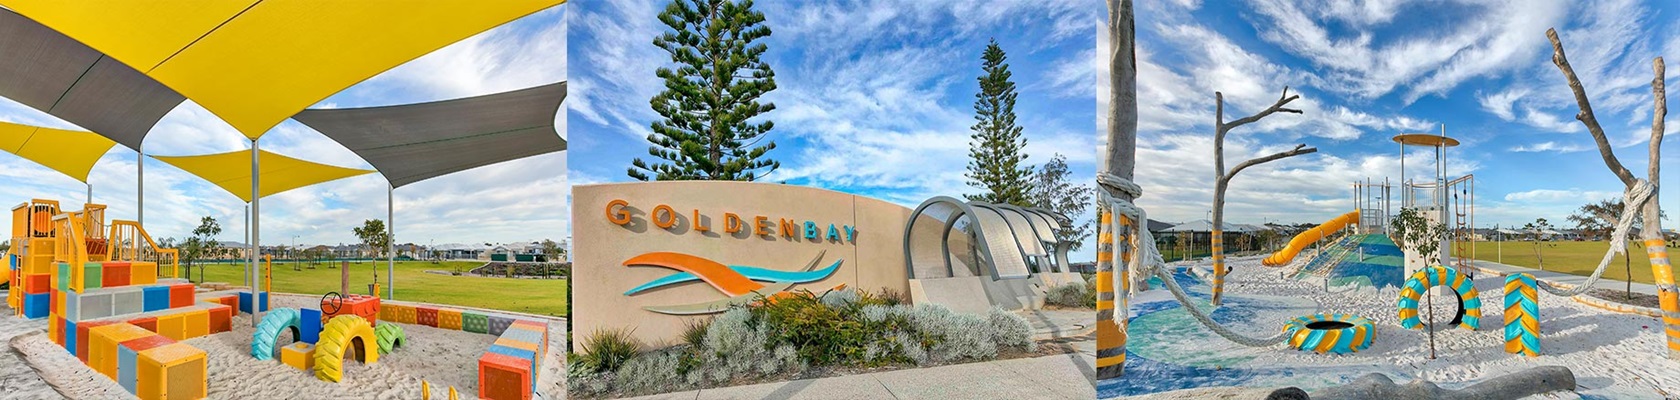 Golden Bay Landscape Protection Area Update